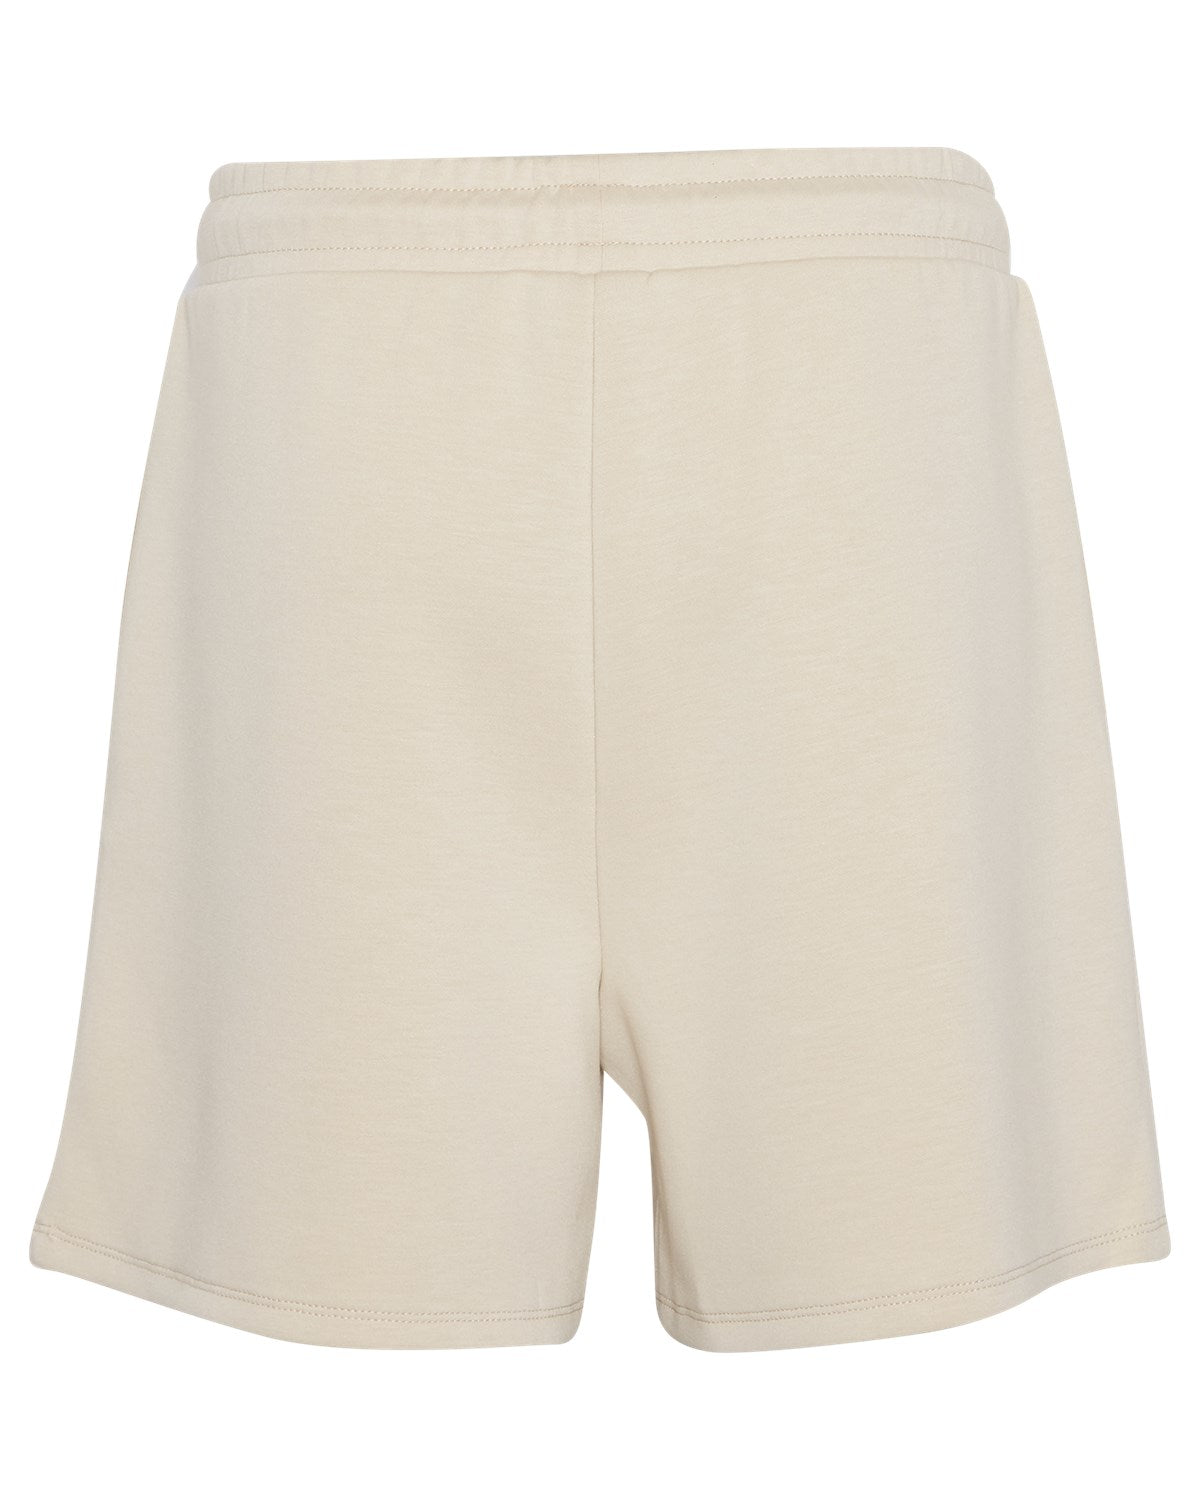 Isora Ima Q Sweat Shorts - Oyster Gray